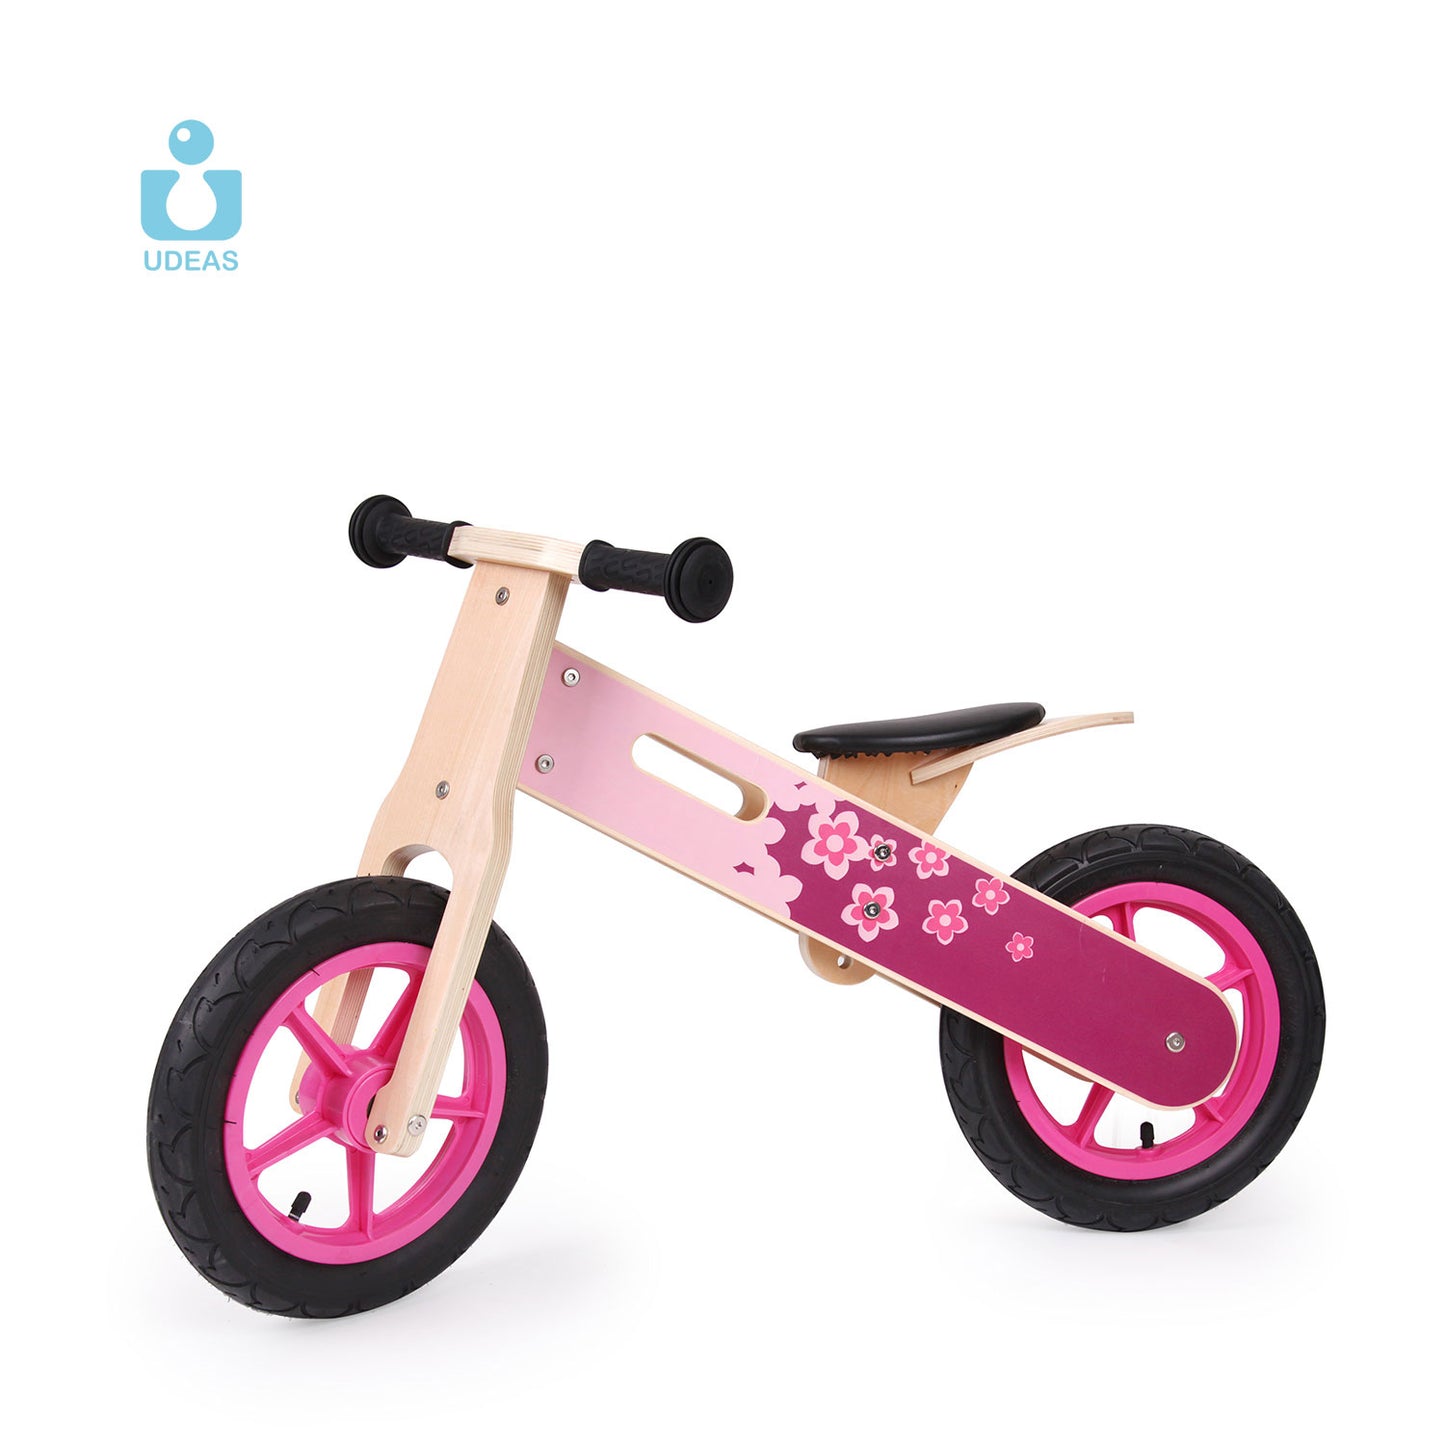 Udeas Spinning Balance Bike Pink Flower EVA Tire